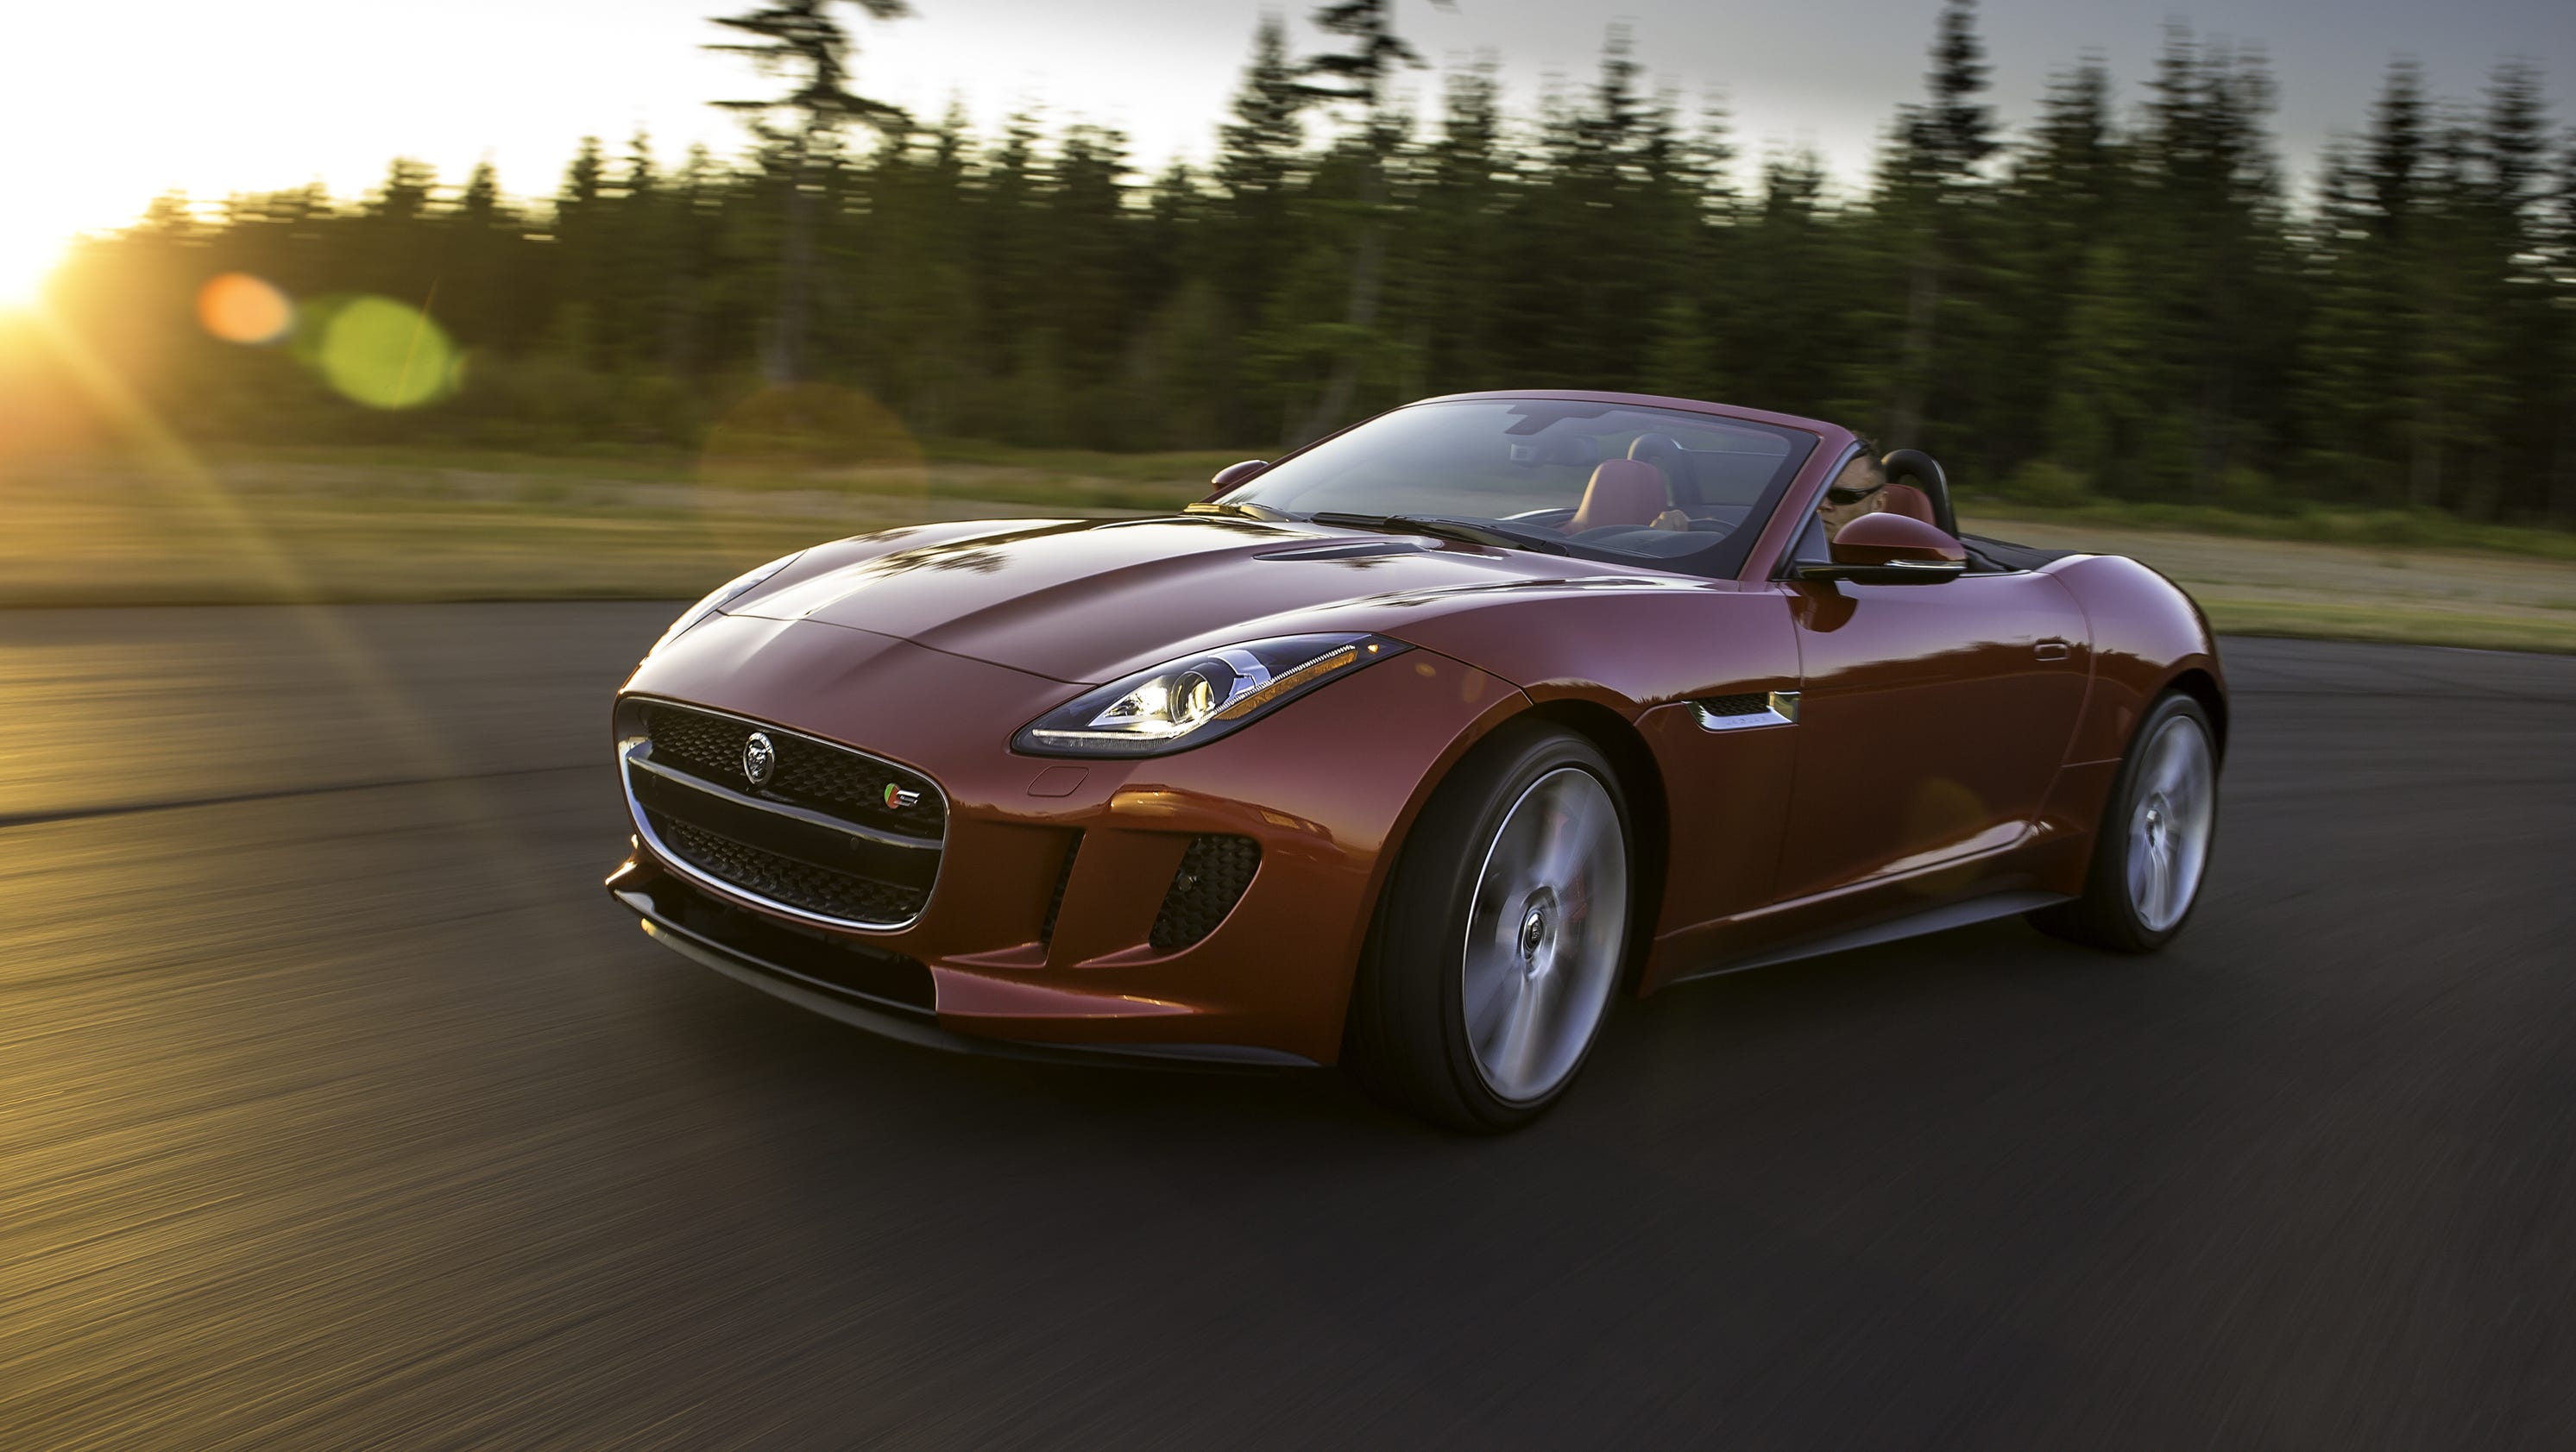 Jaguar adds more goodies to F-Type sports car